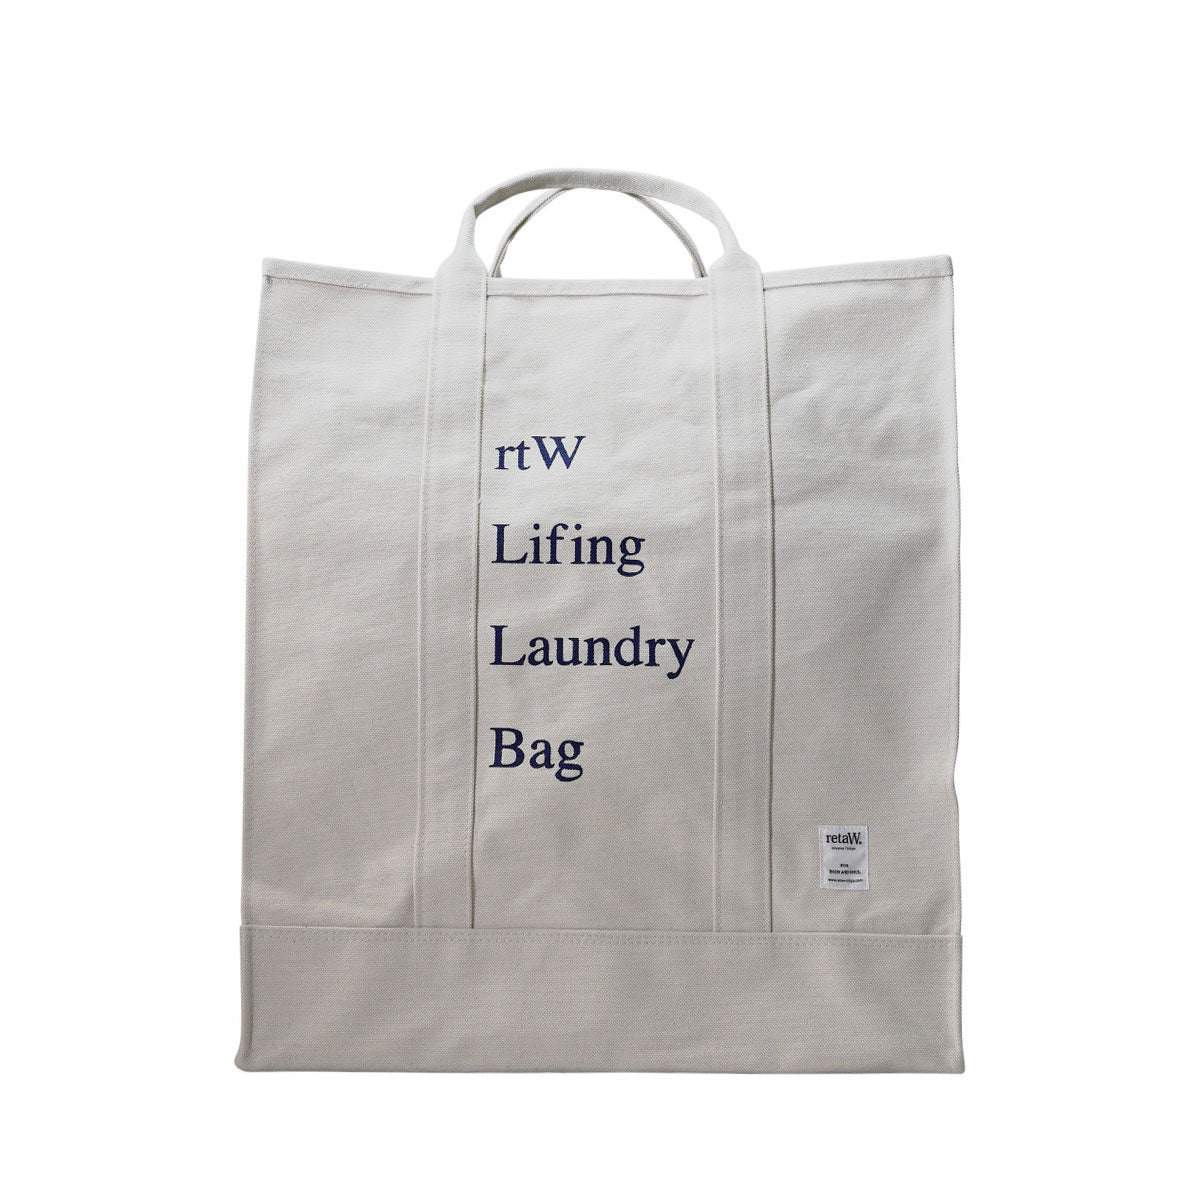 Image of retaW Laundry Bag rtW Lifing (Natural)